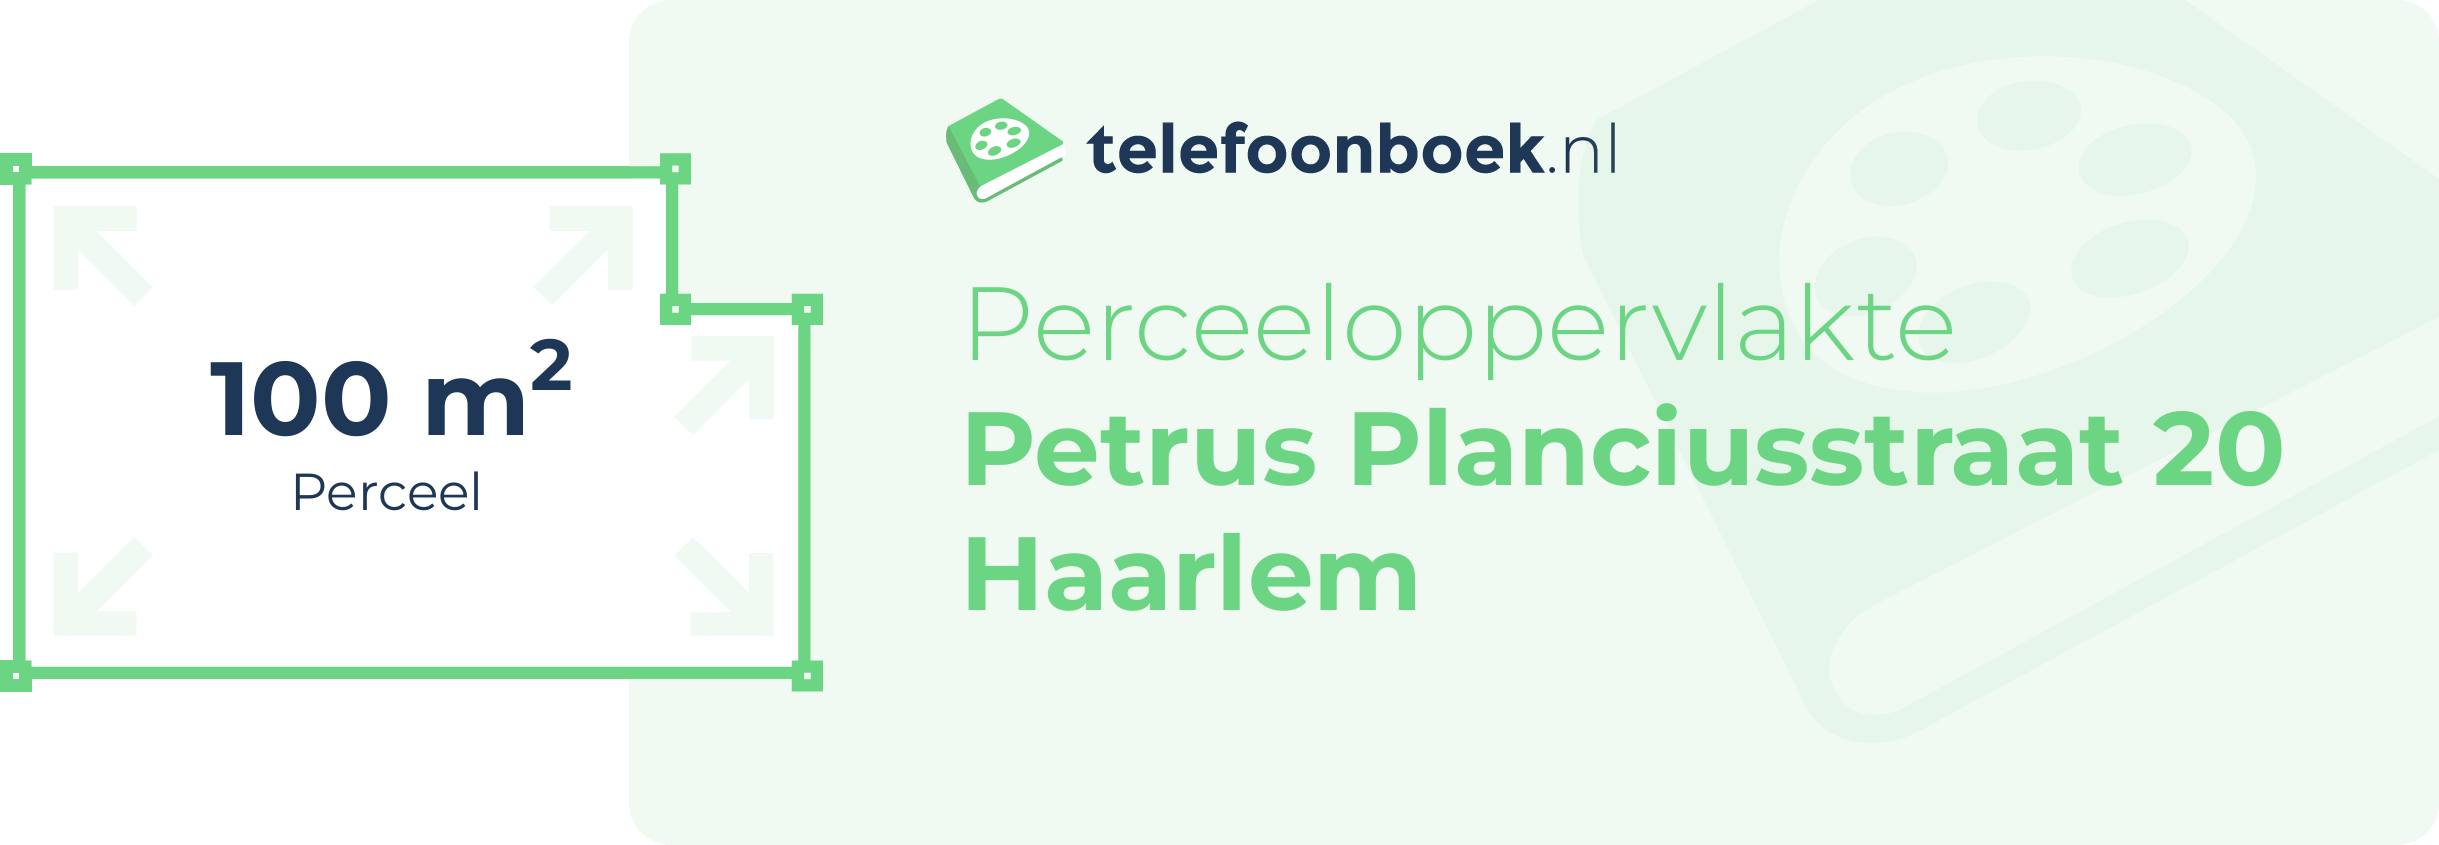 Perceeloppervlakte Petrus Planciusstraat 20 Haarlem